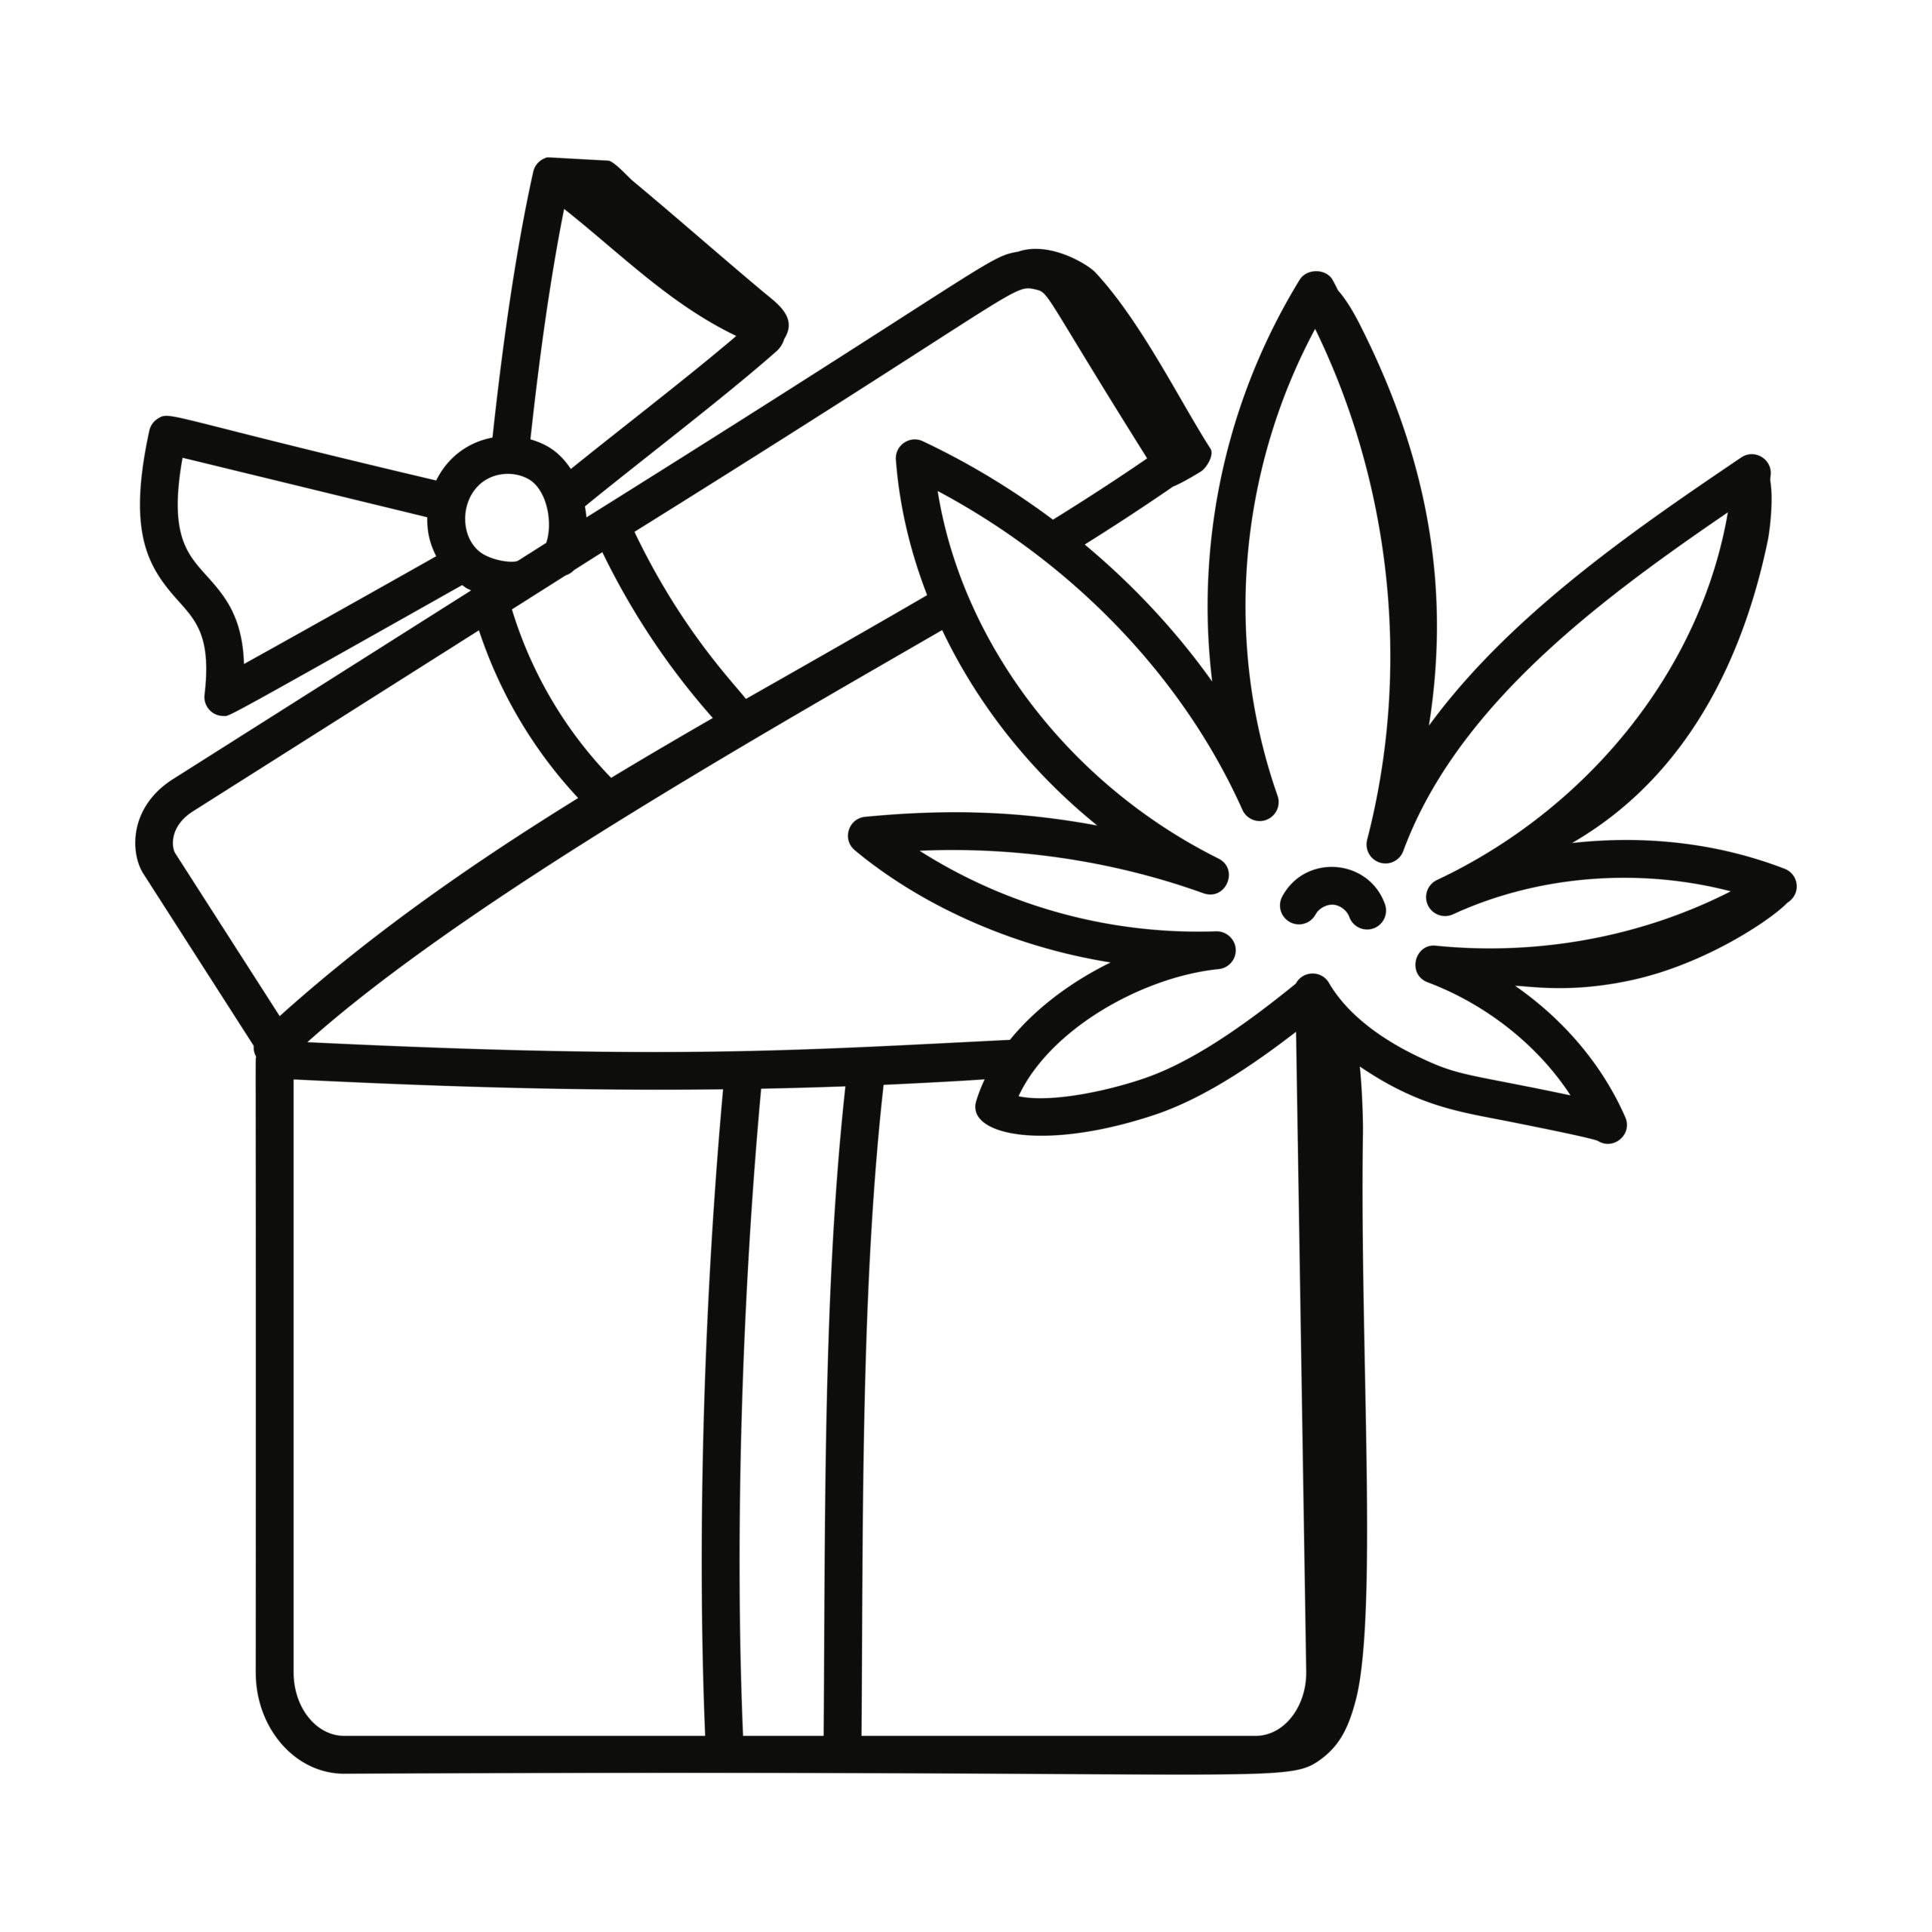 Cannabis Gift Guide